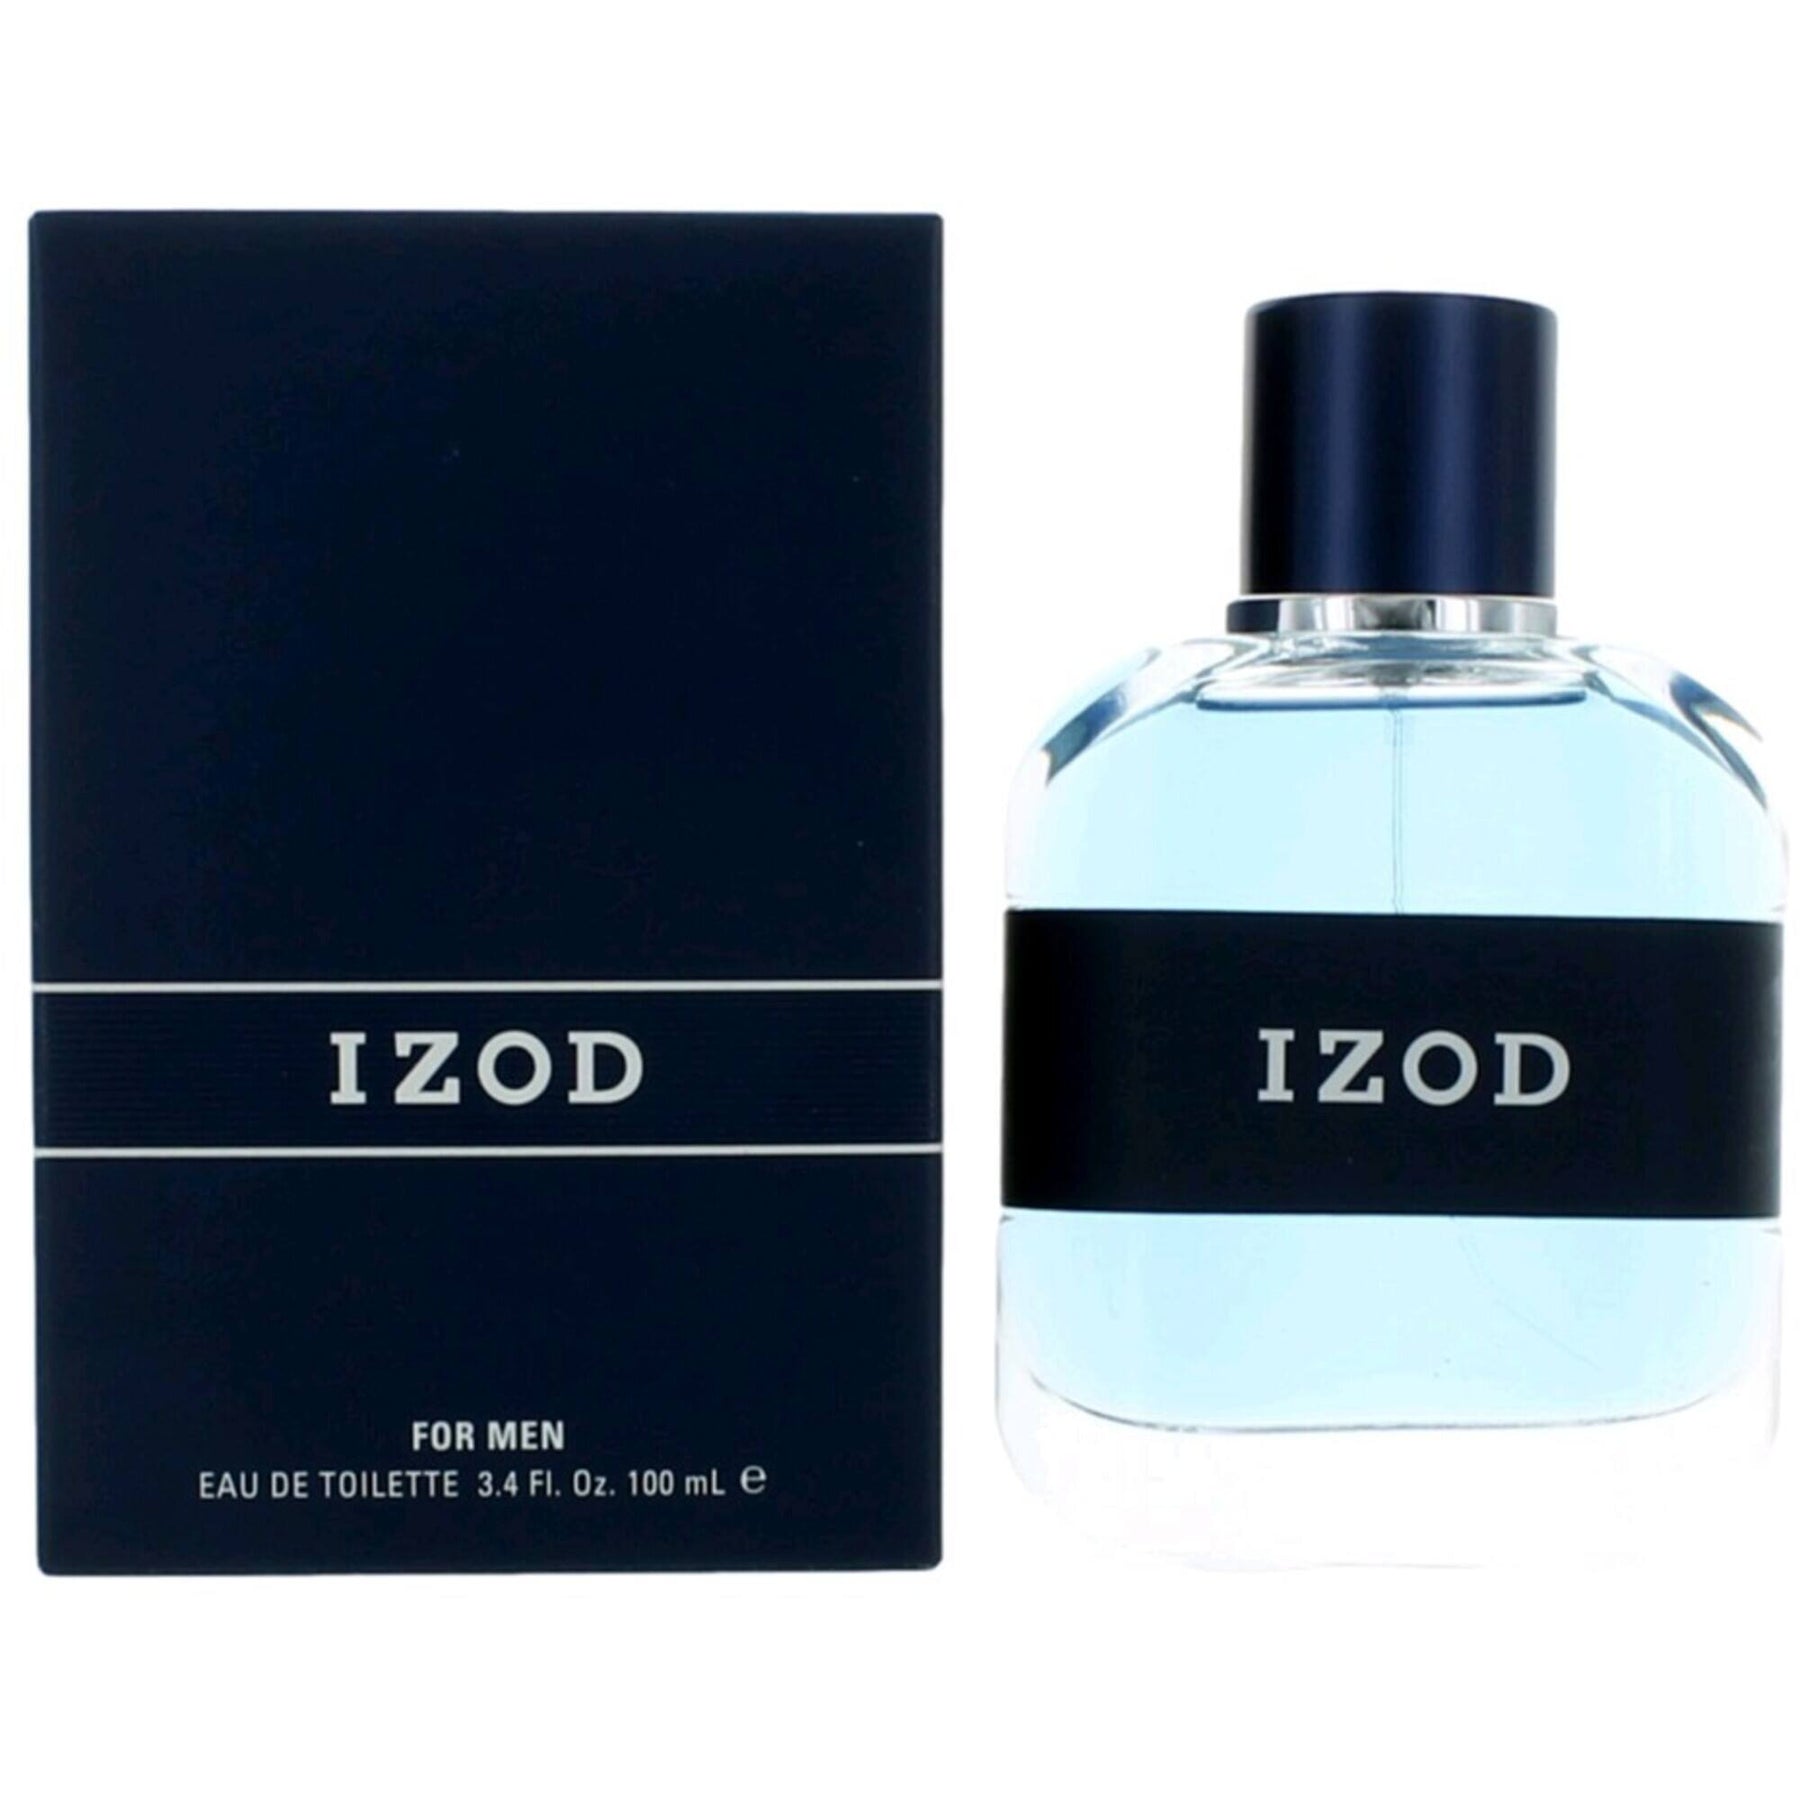 Izod Men's Eau De Toilette Spray - Invigorating and Captivating Allure